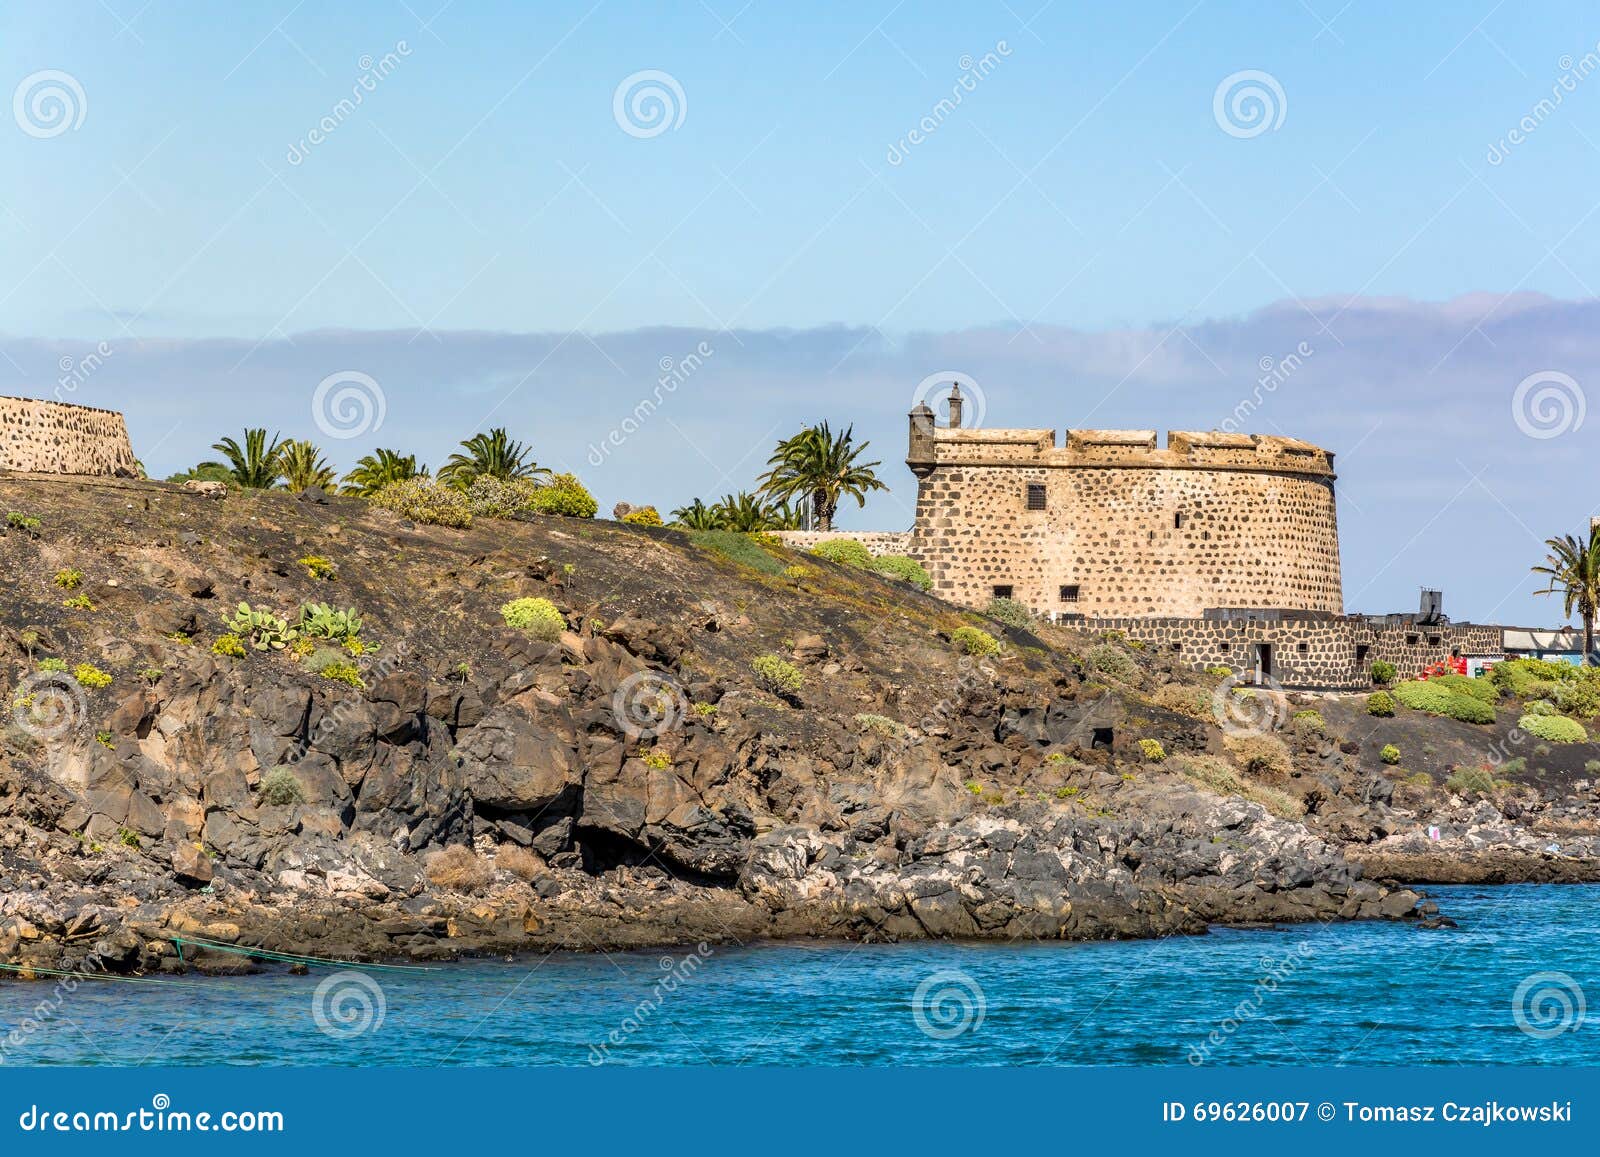 castillo de san jose, castle of san jose, arrecife, lanzarote, spain